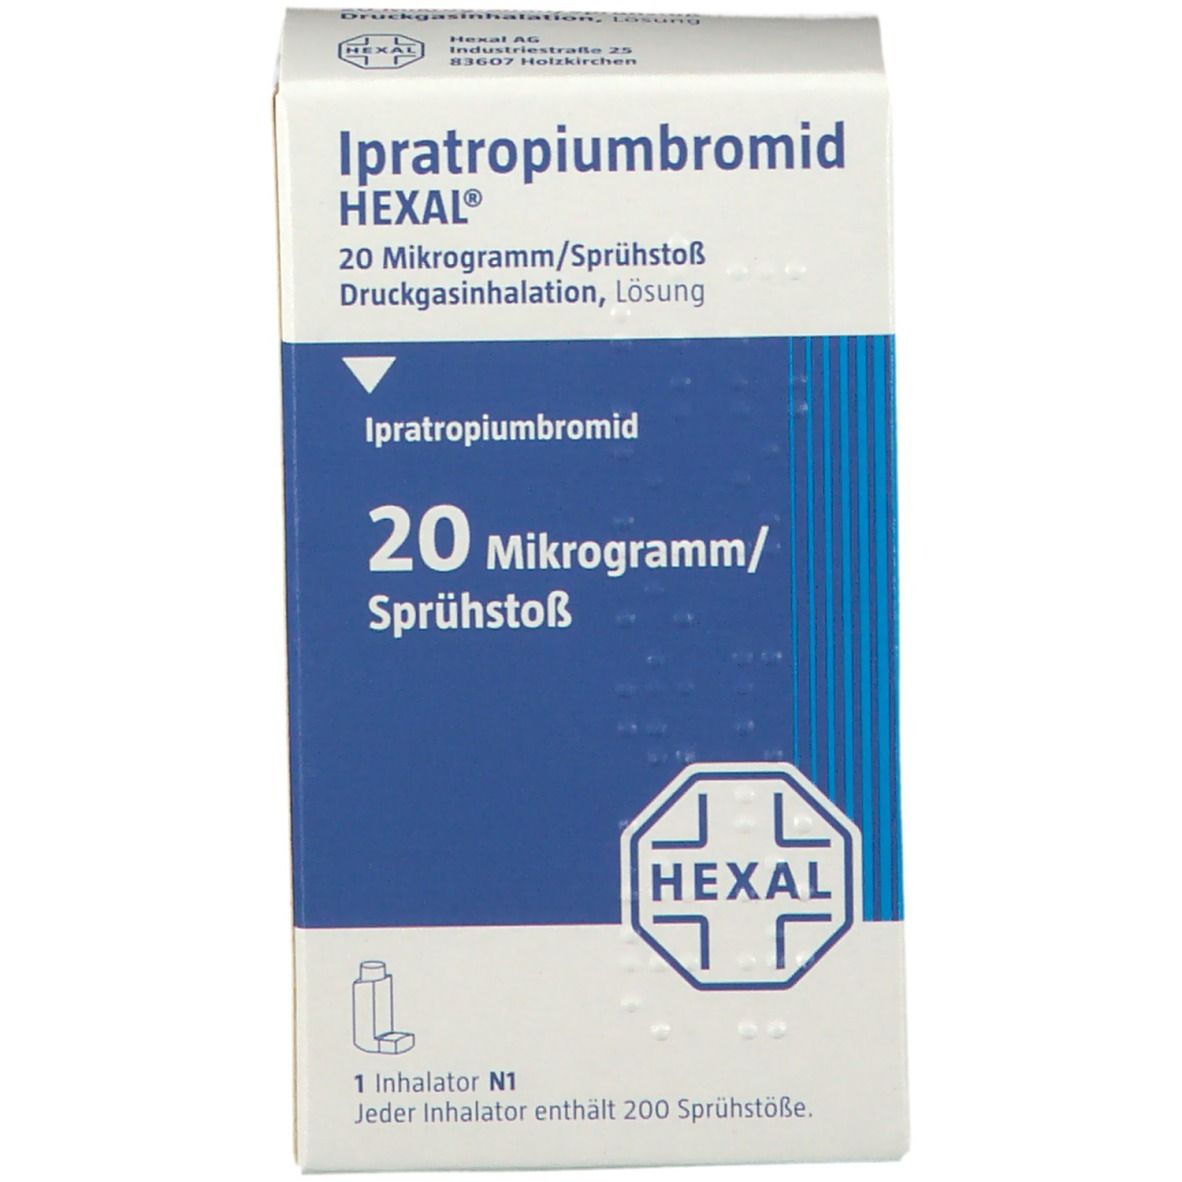 Ipratropiumbromid HEXAL® 20 Mikrogramm/Sprühstoß